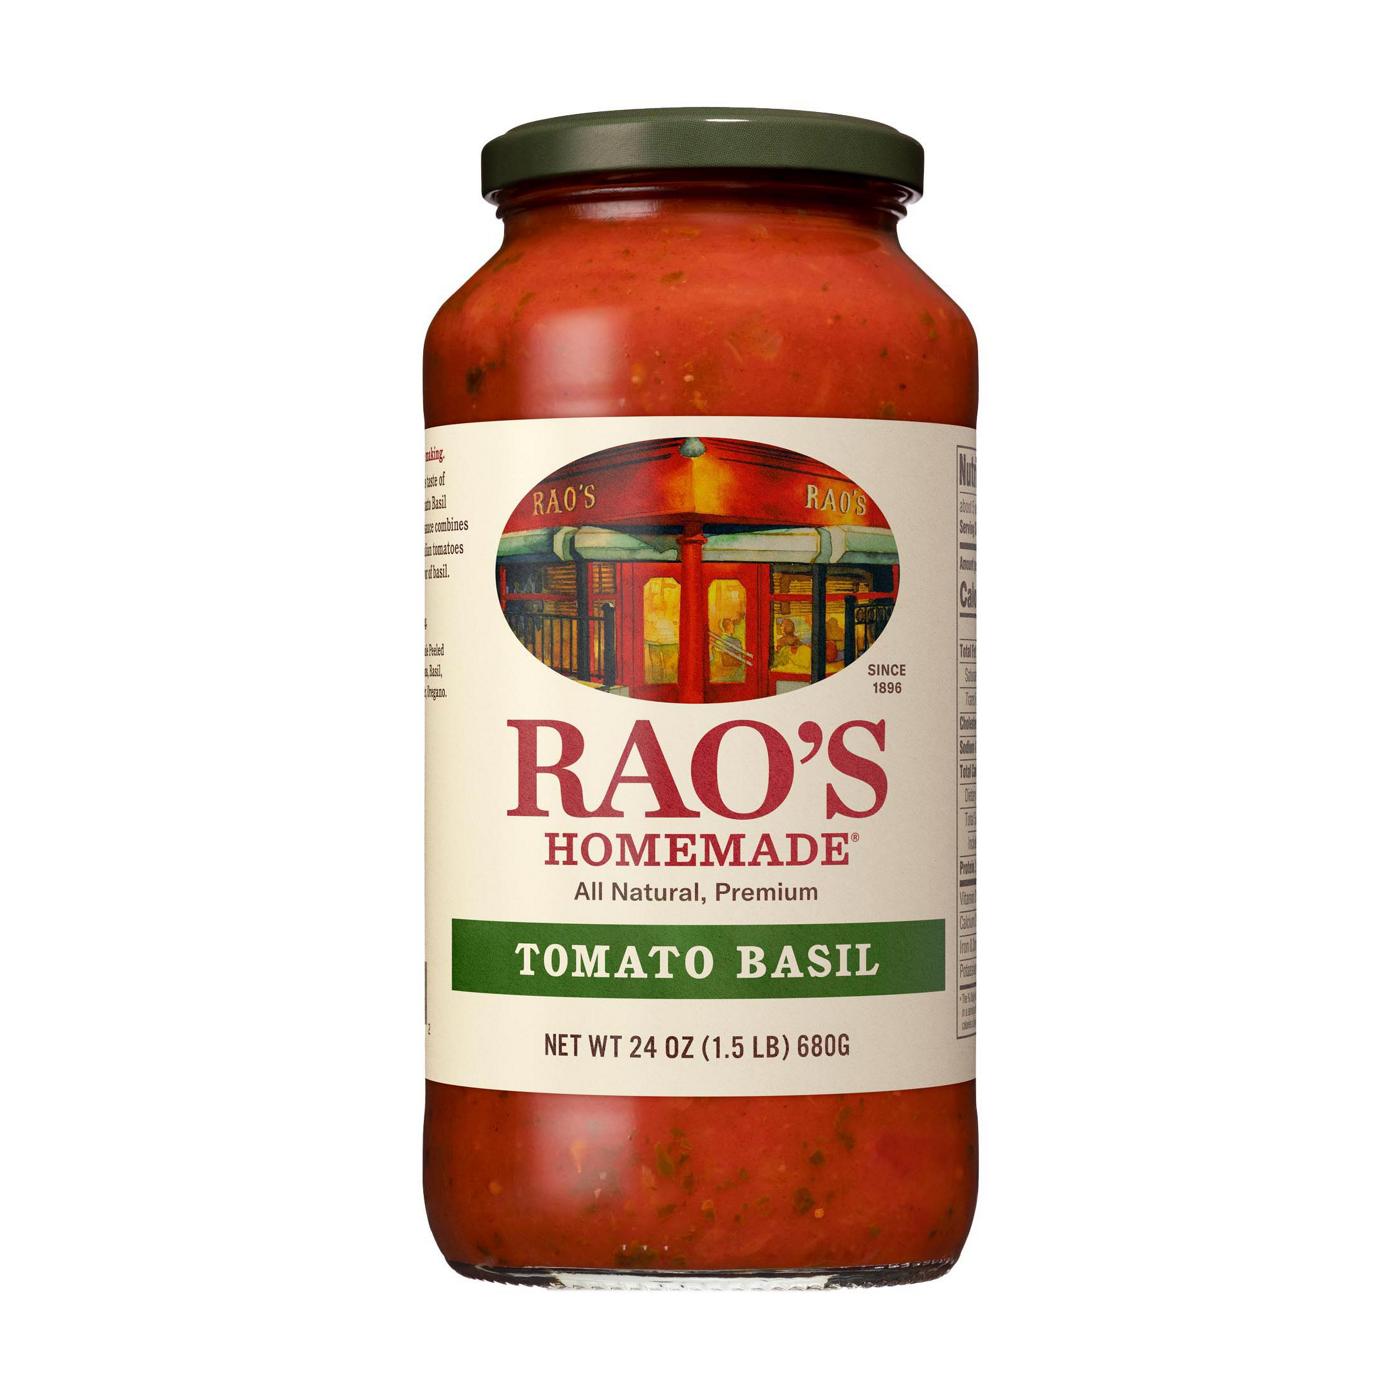 Rao's Homemade Tomato Basil Pasta Sauce; image 1 of 3